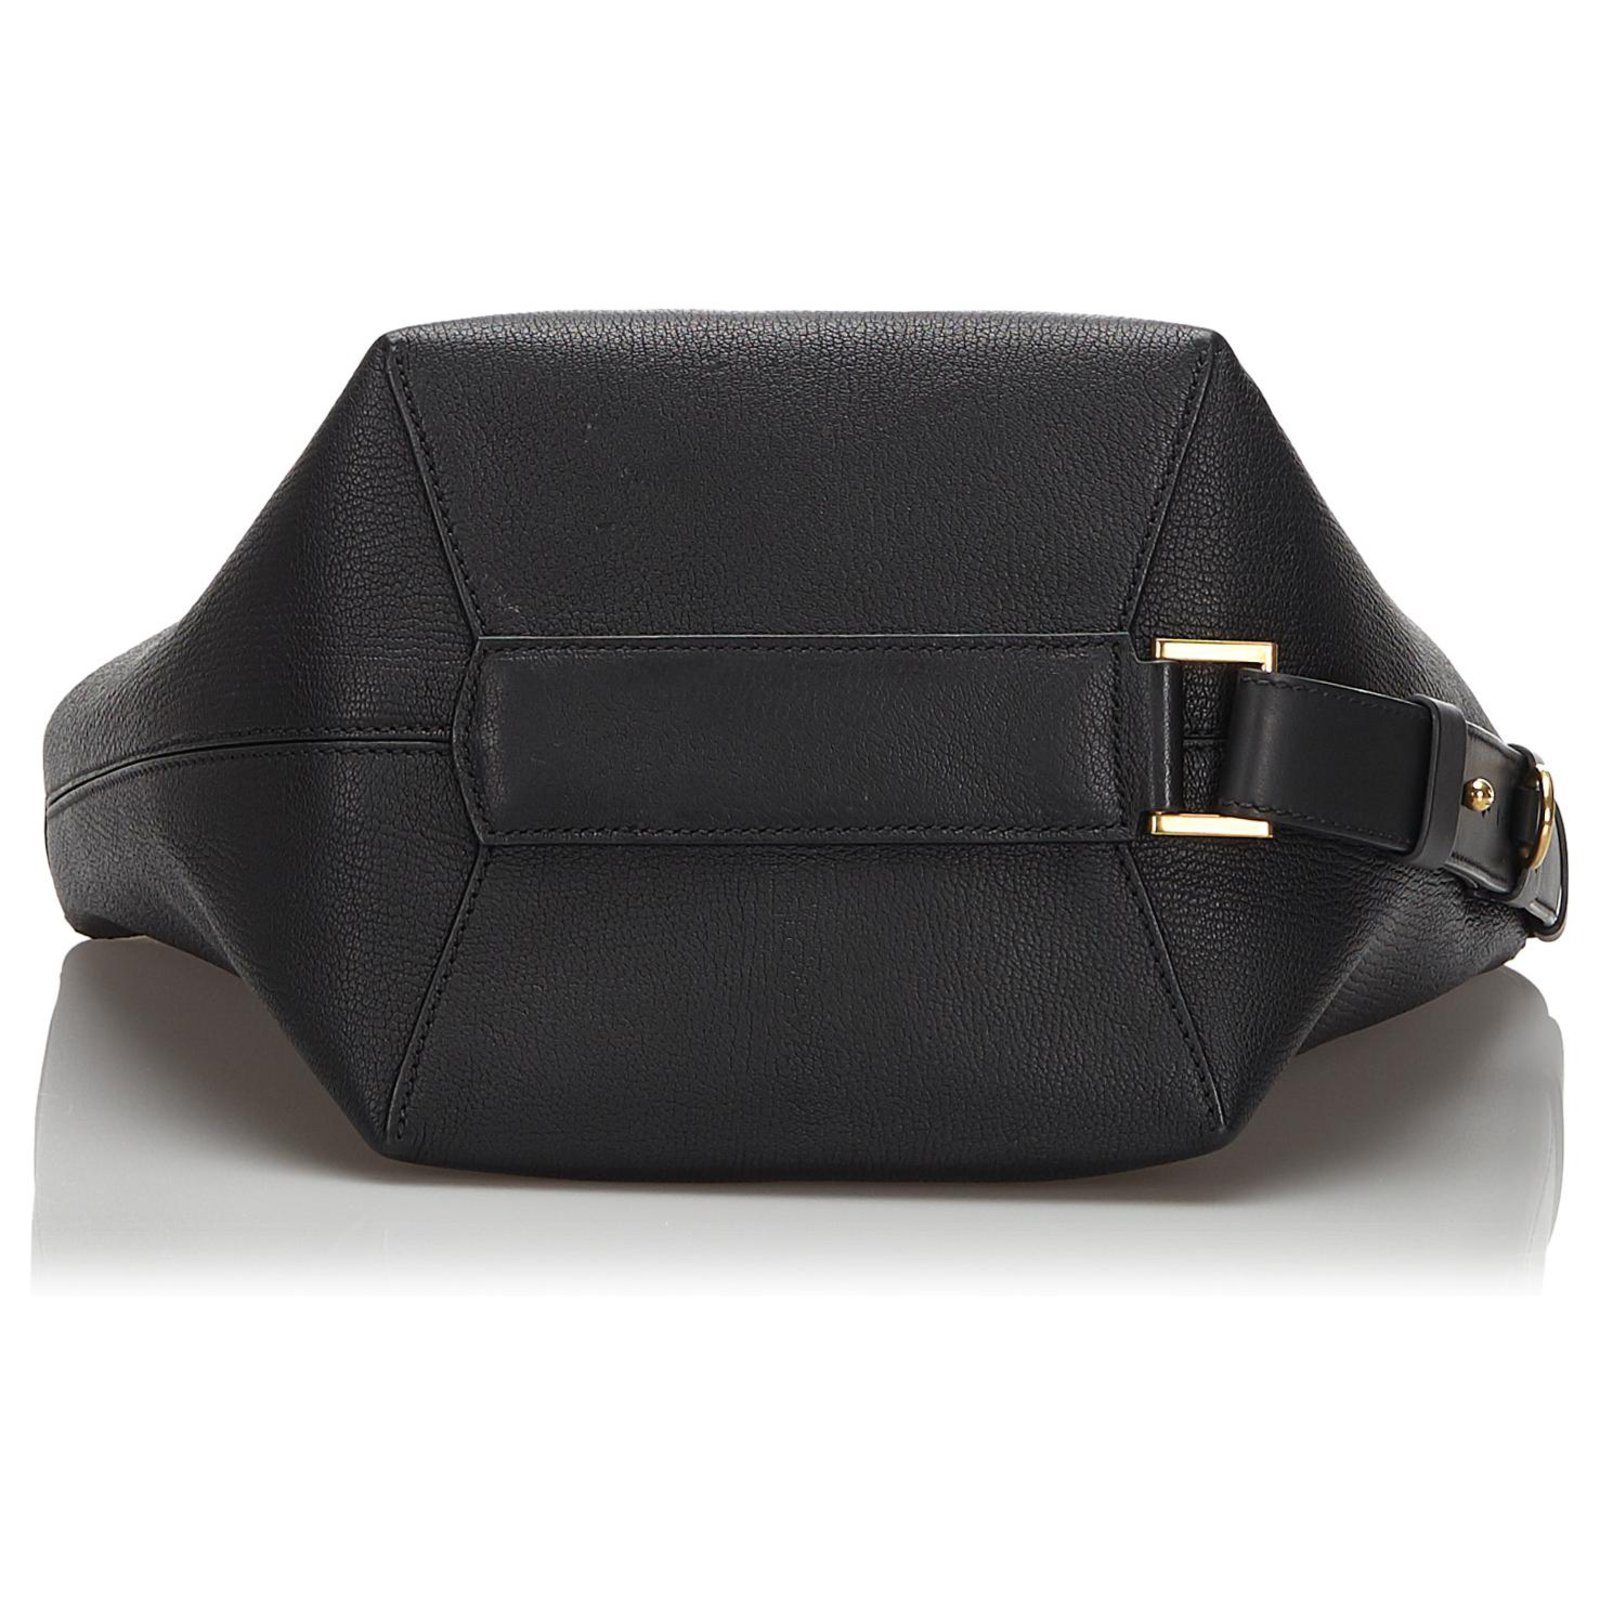 Seau gv bucket leather handbag Givenchy Black in Leather - 24440935